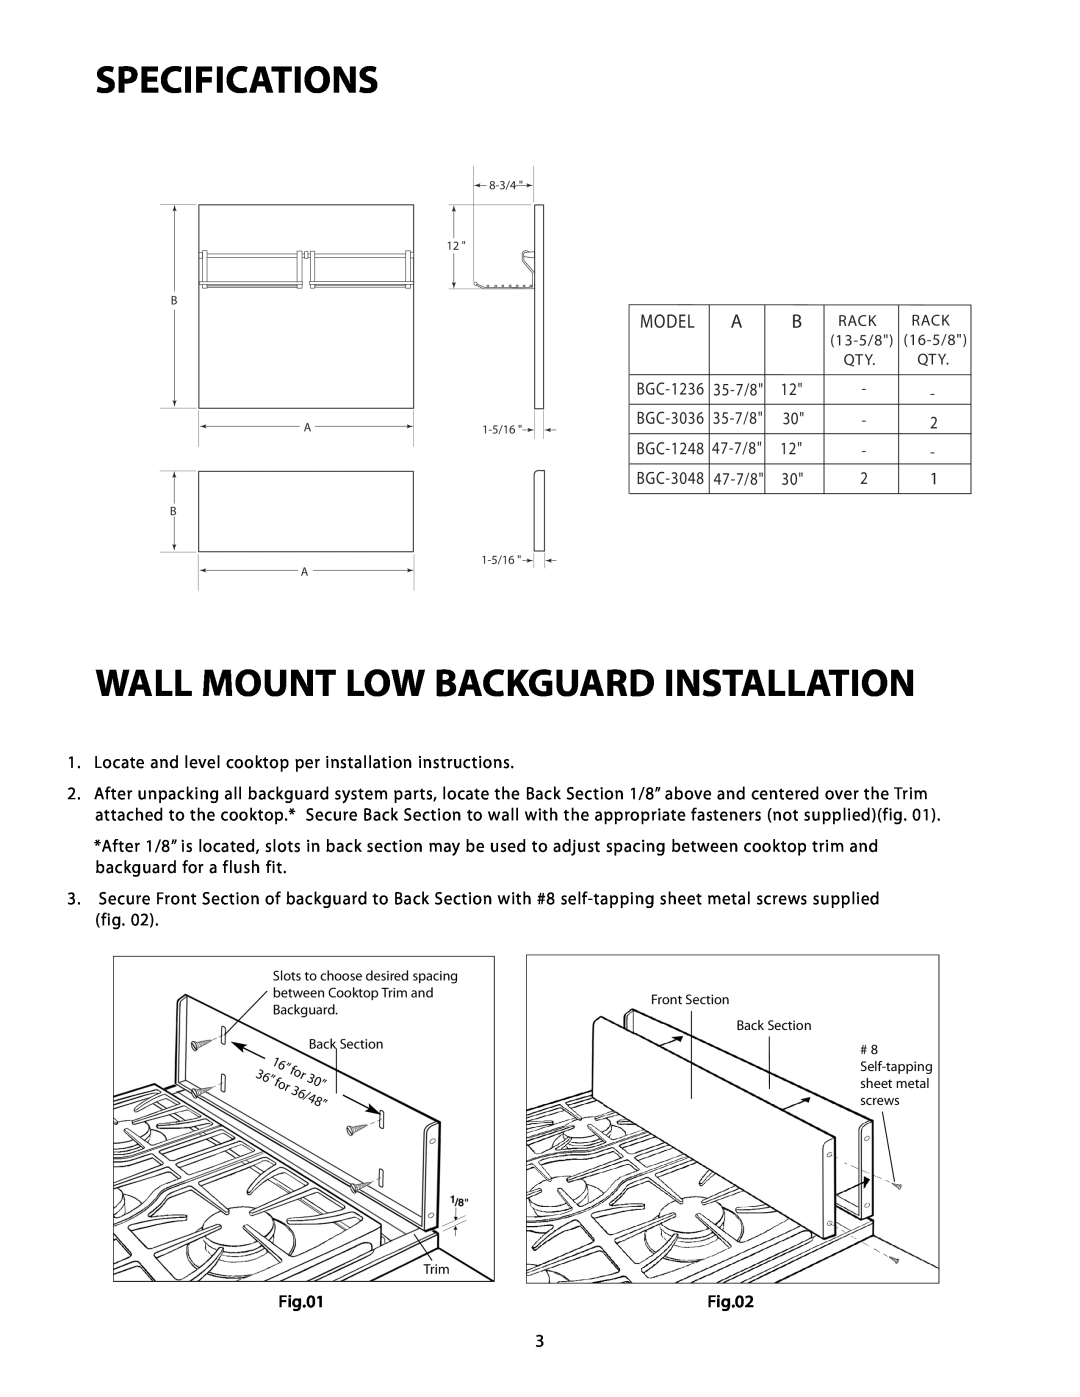 DCS BGC-1236, BGC-3048, BGC-3036, BGC-1248 manual Specifications, Wall Mount Low Backguard Installation, Model 